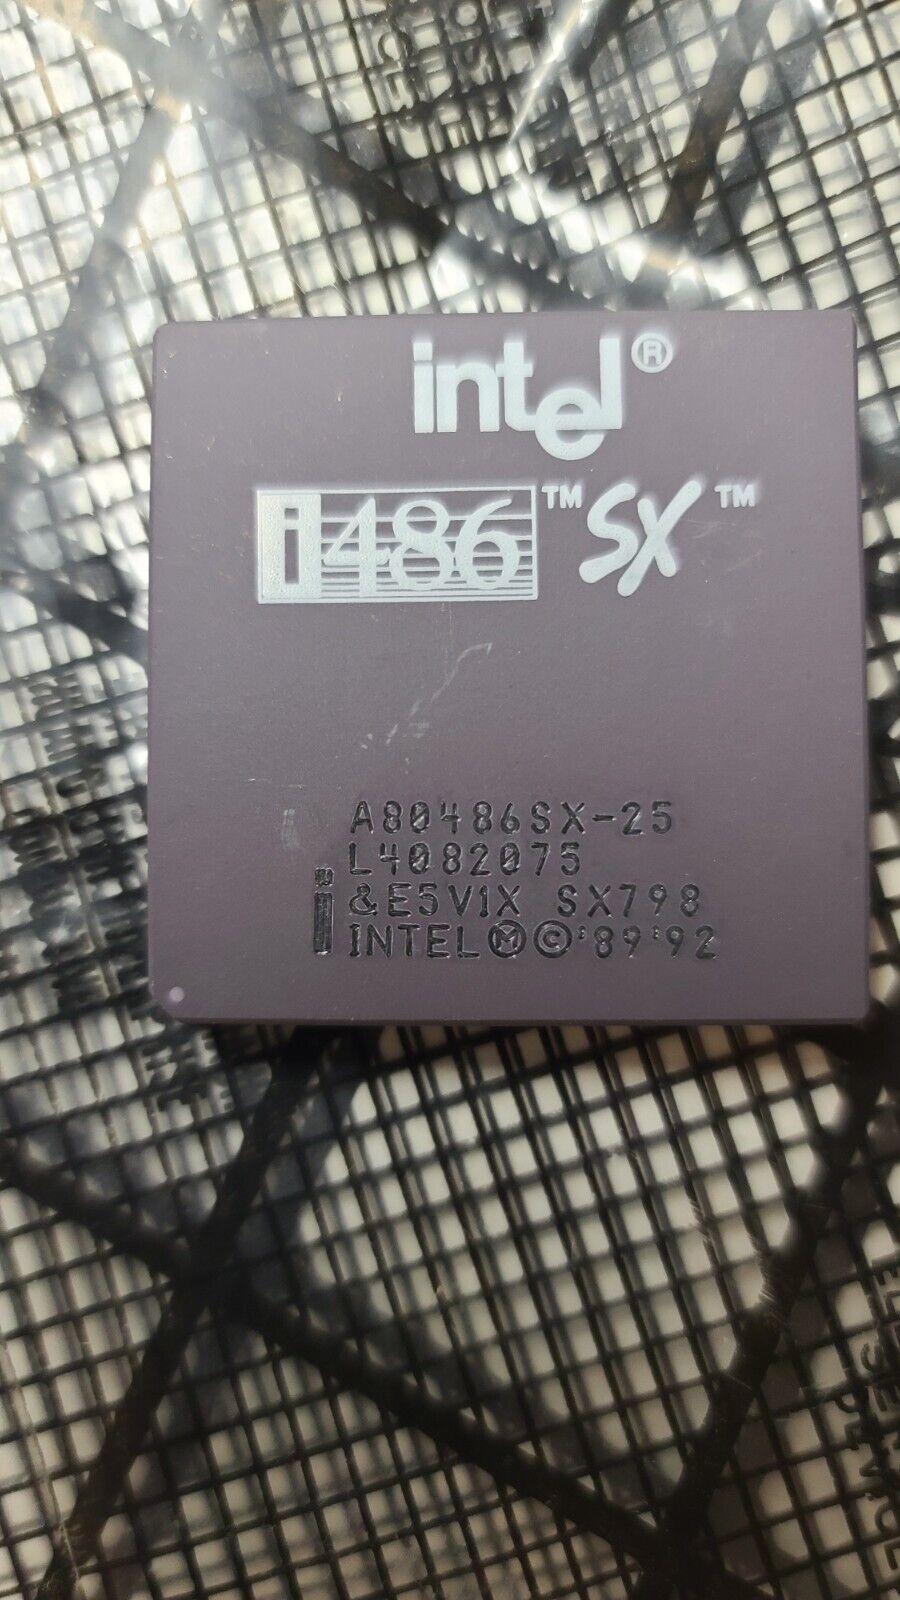 Intel 486 SX 25Mhz